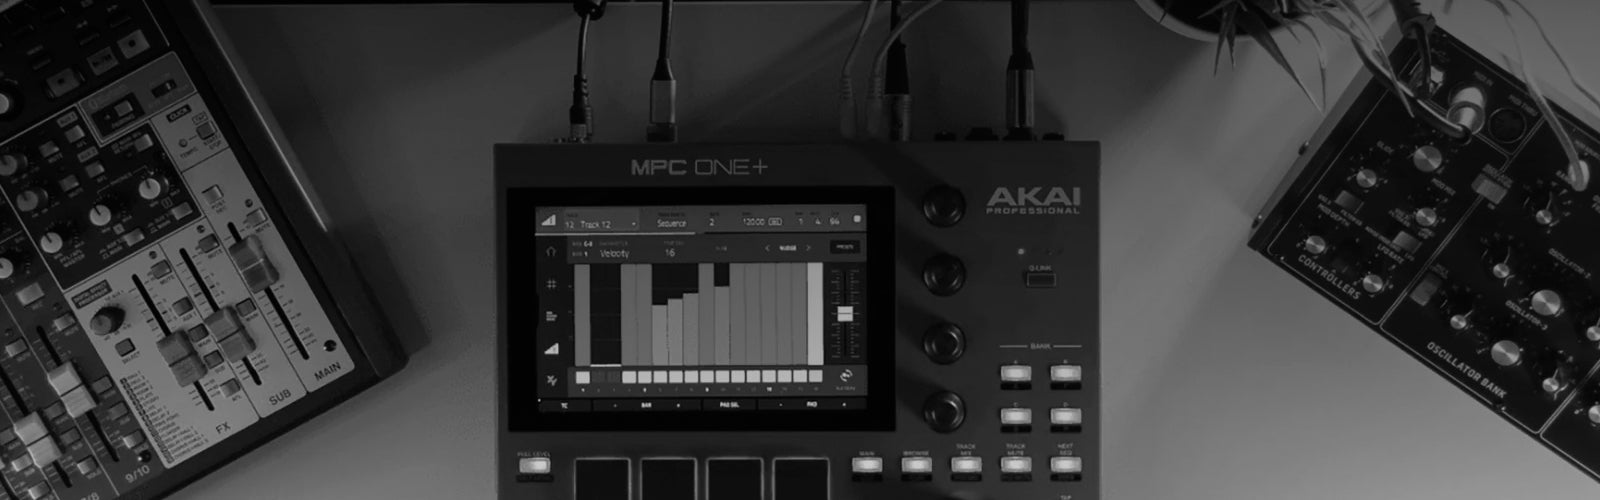 The Akai MPC One+ in a studio environment